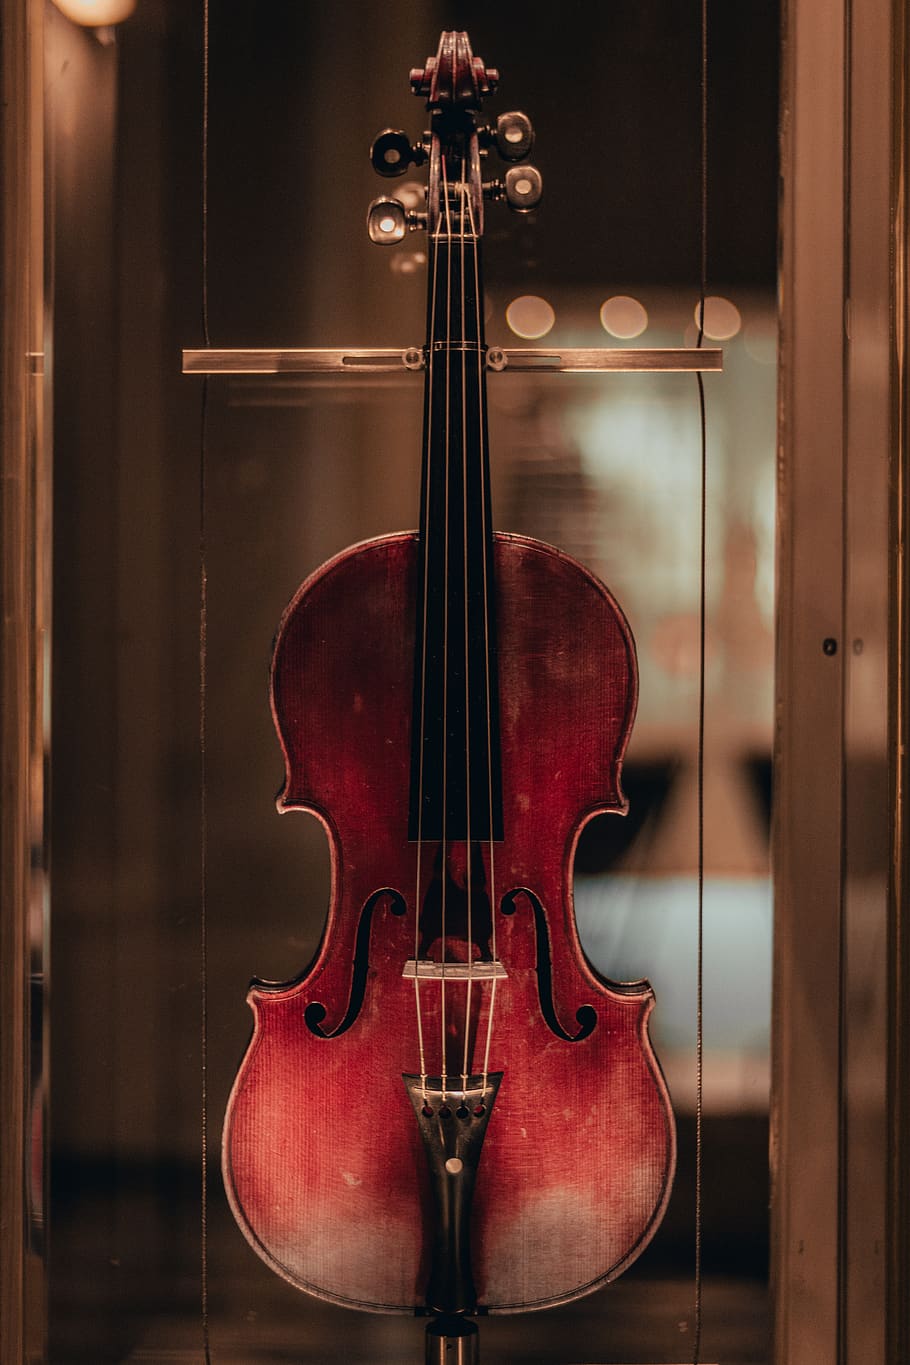 leisure activities, fiddle, musical instrument, violin, viola